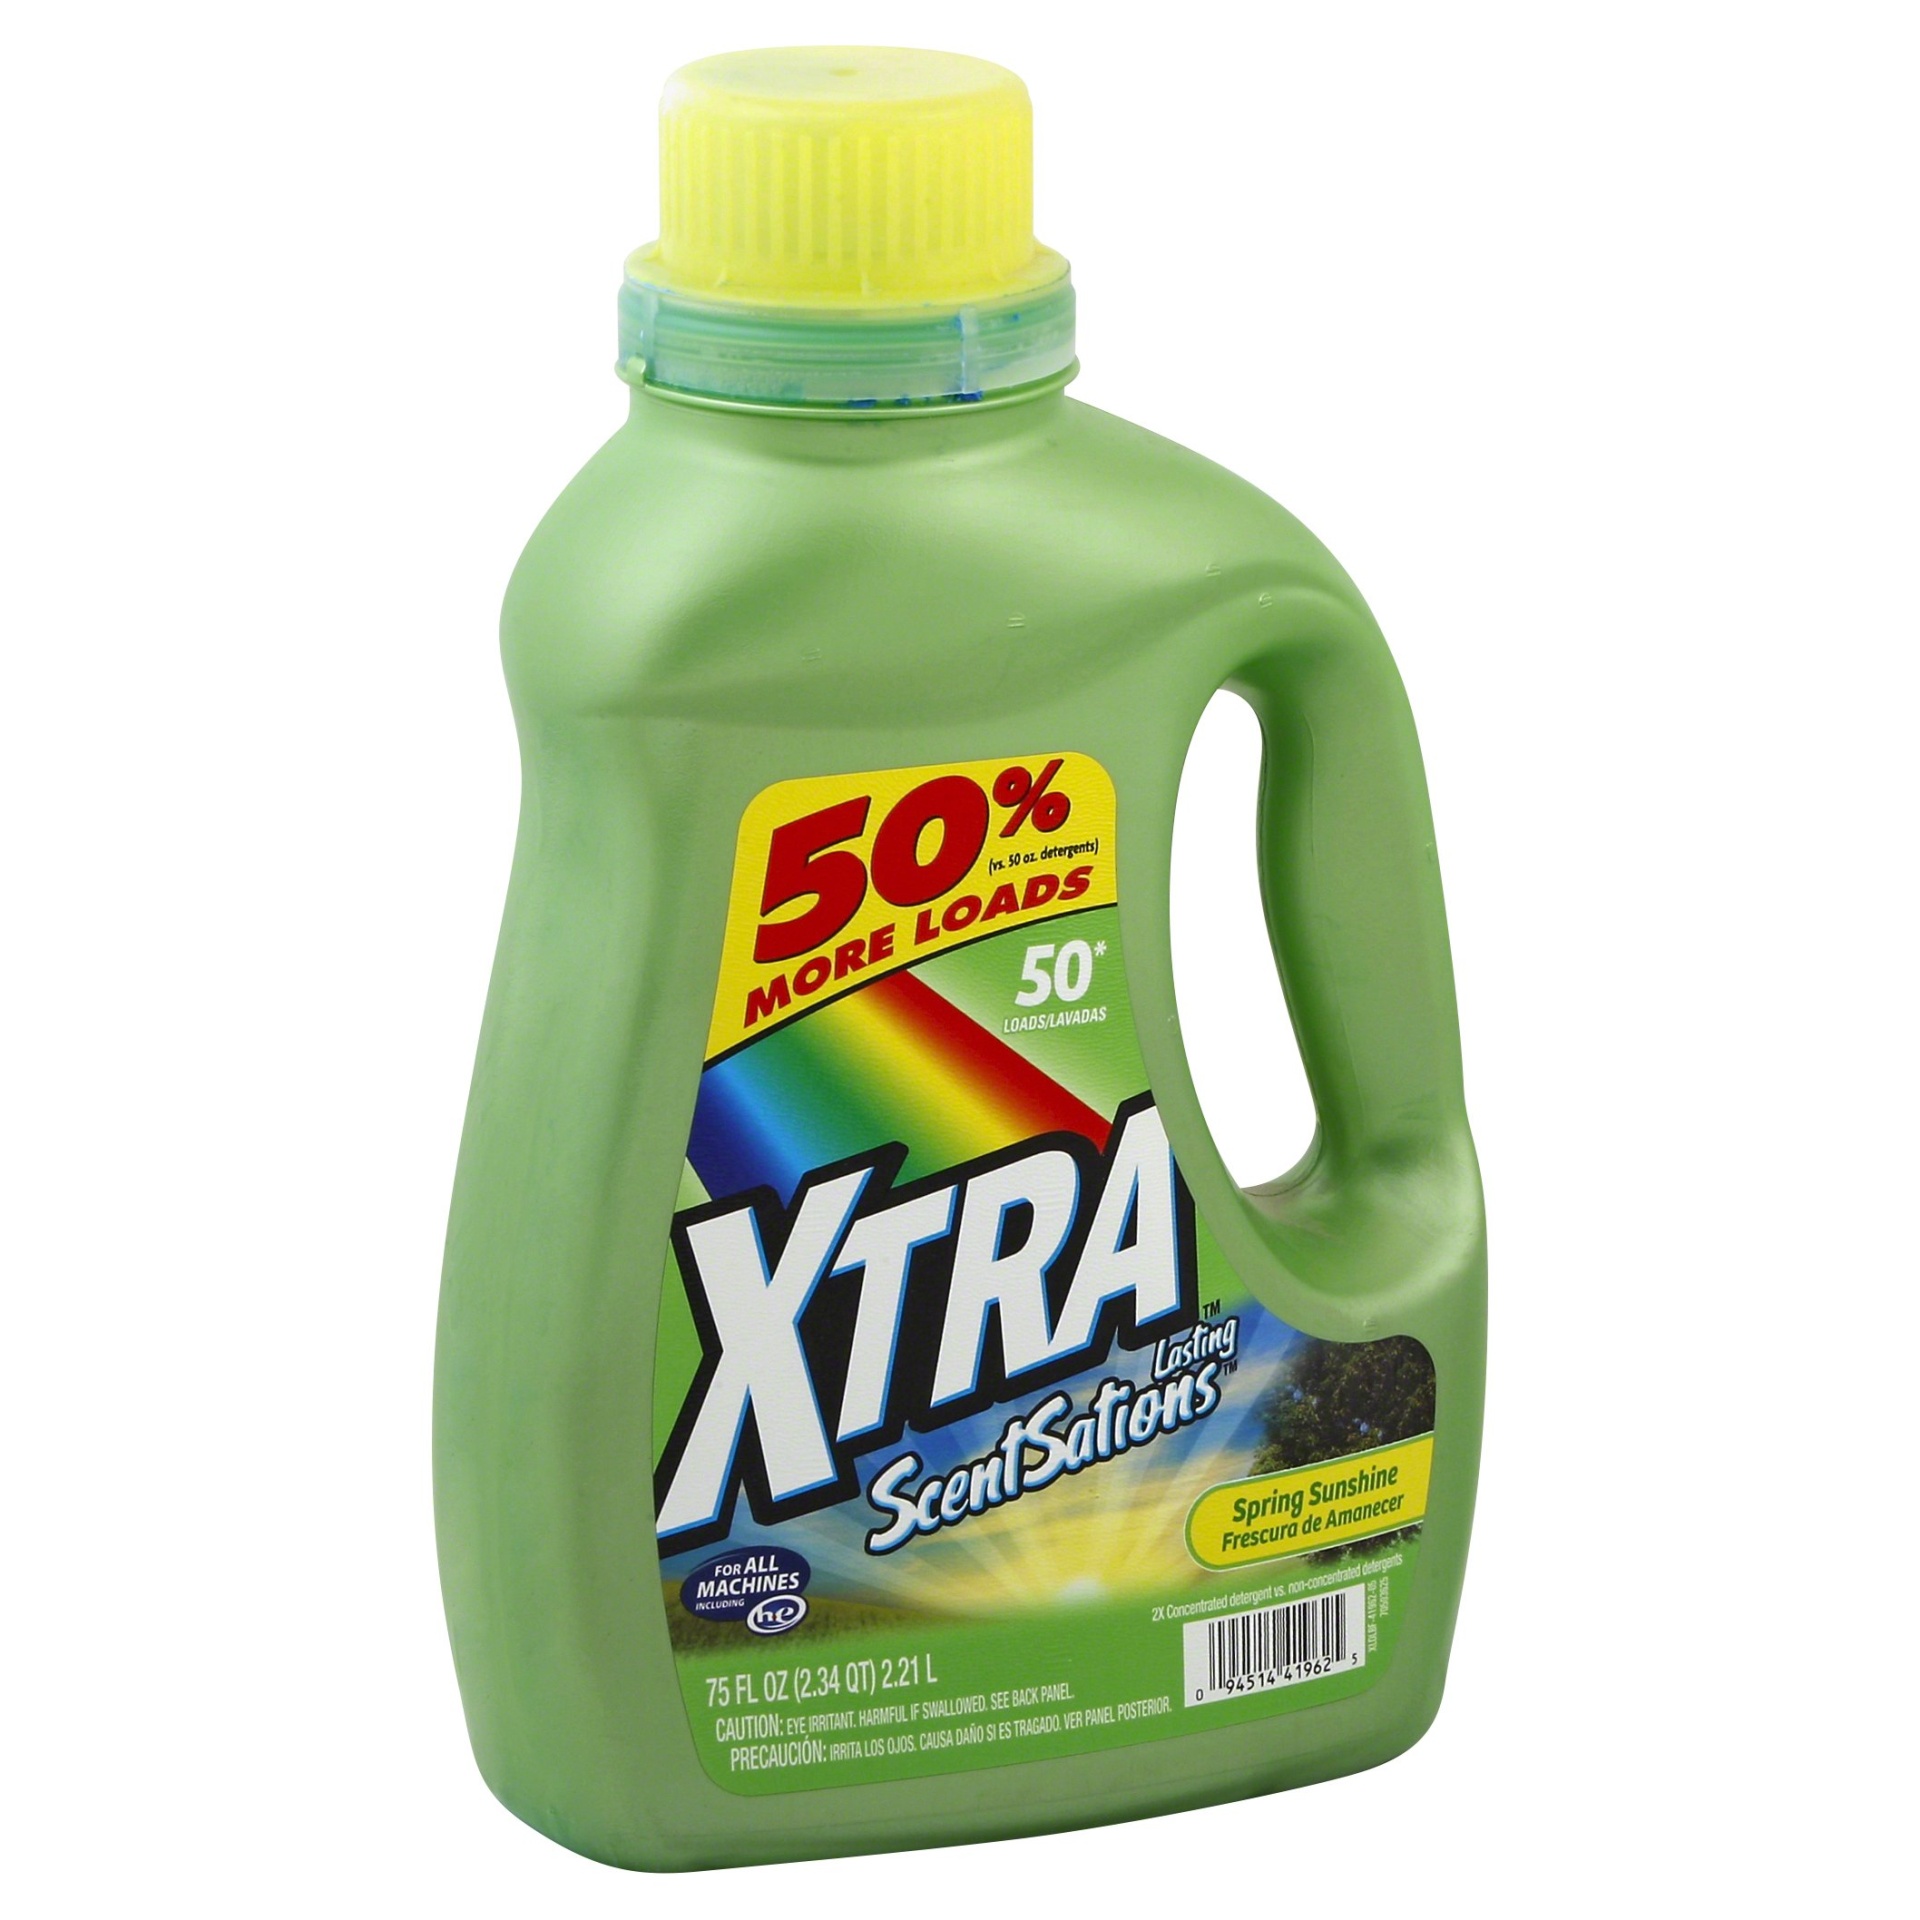 slide 1 of 4, Xtra Lasting ScentSations Spring Sunshine Liquid Laundry Detergent, 75 fl oz